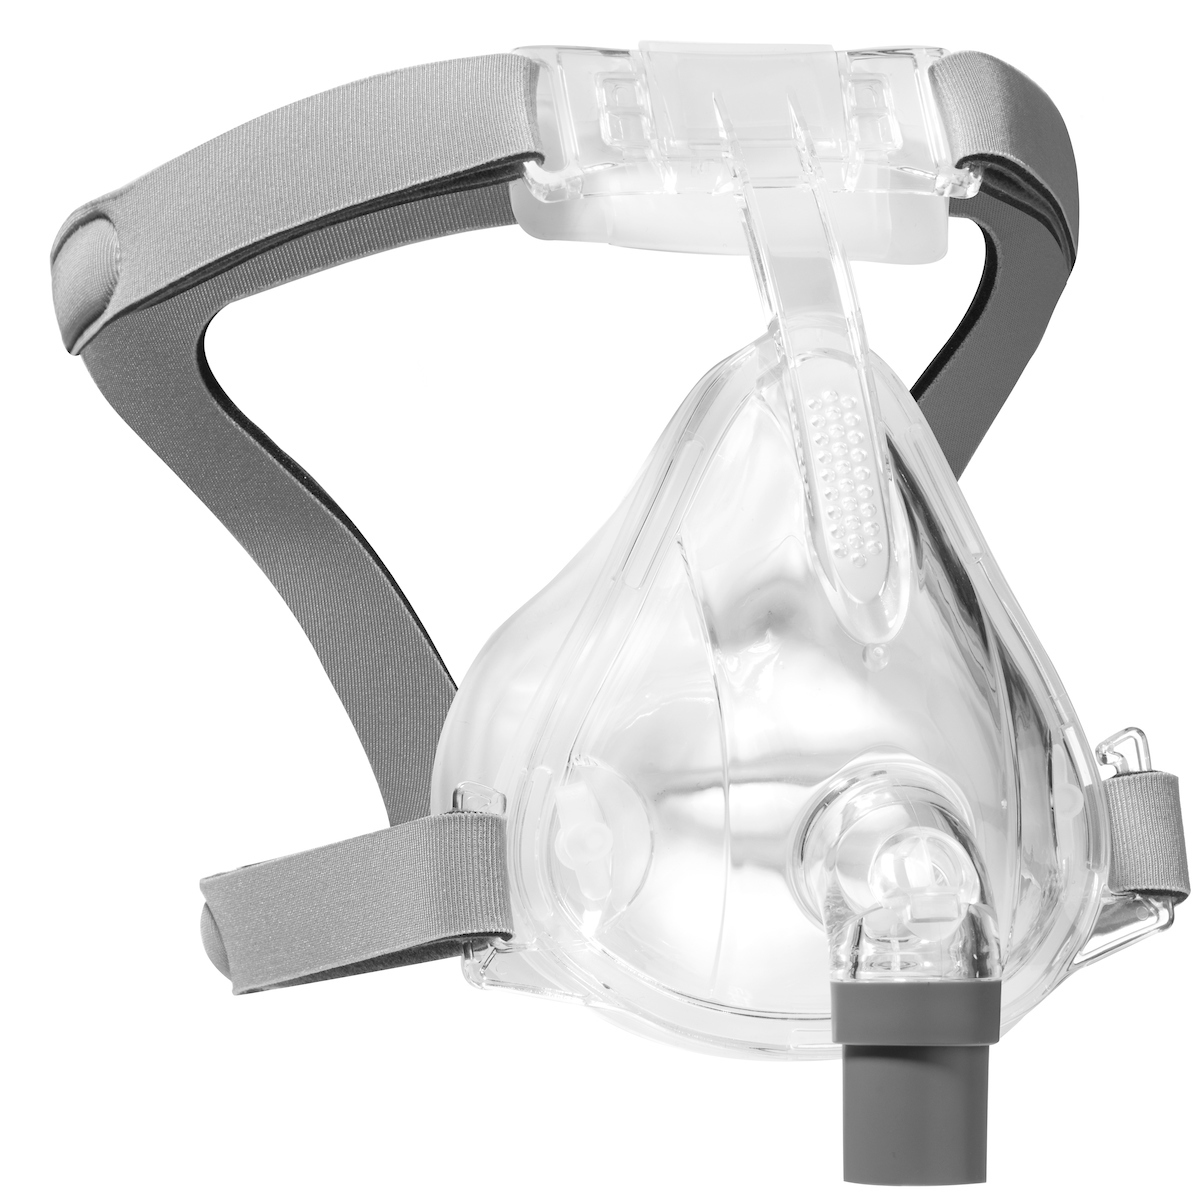 Numa Full Face Mask PAP CPAP React Health 3B Medical